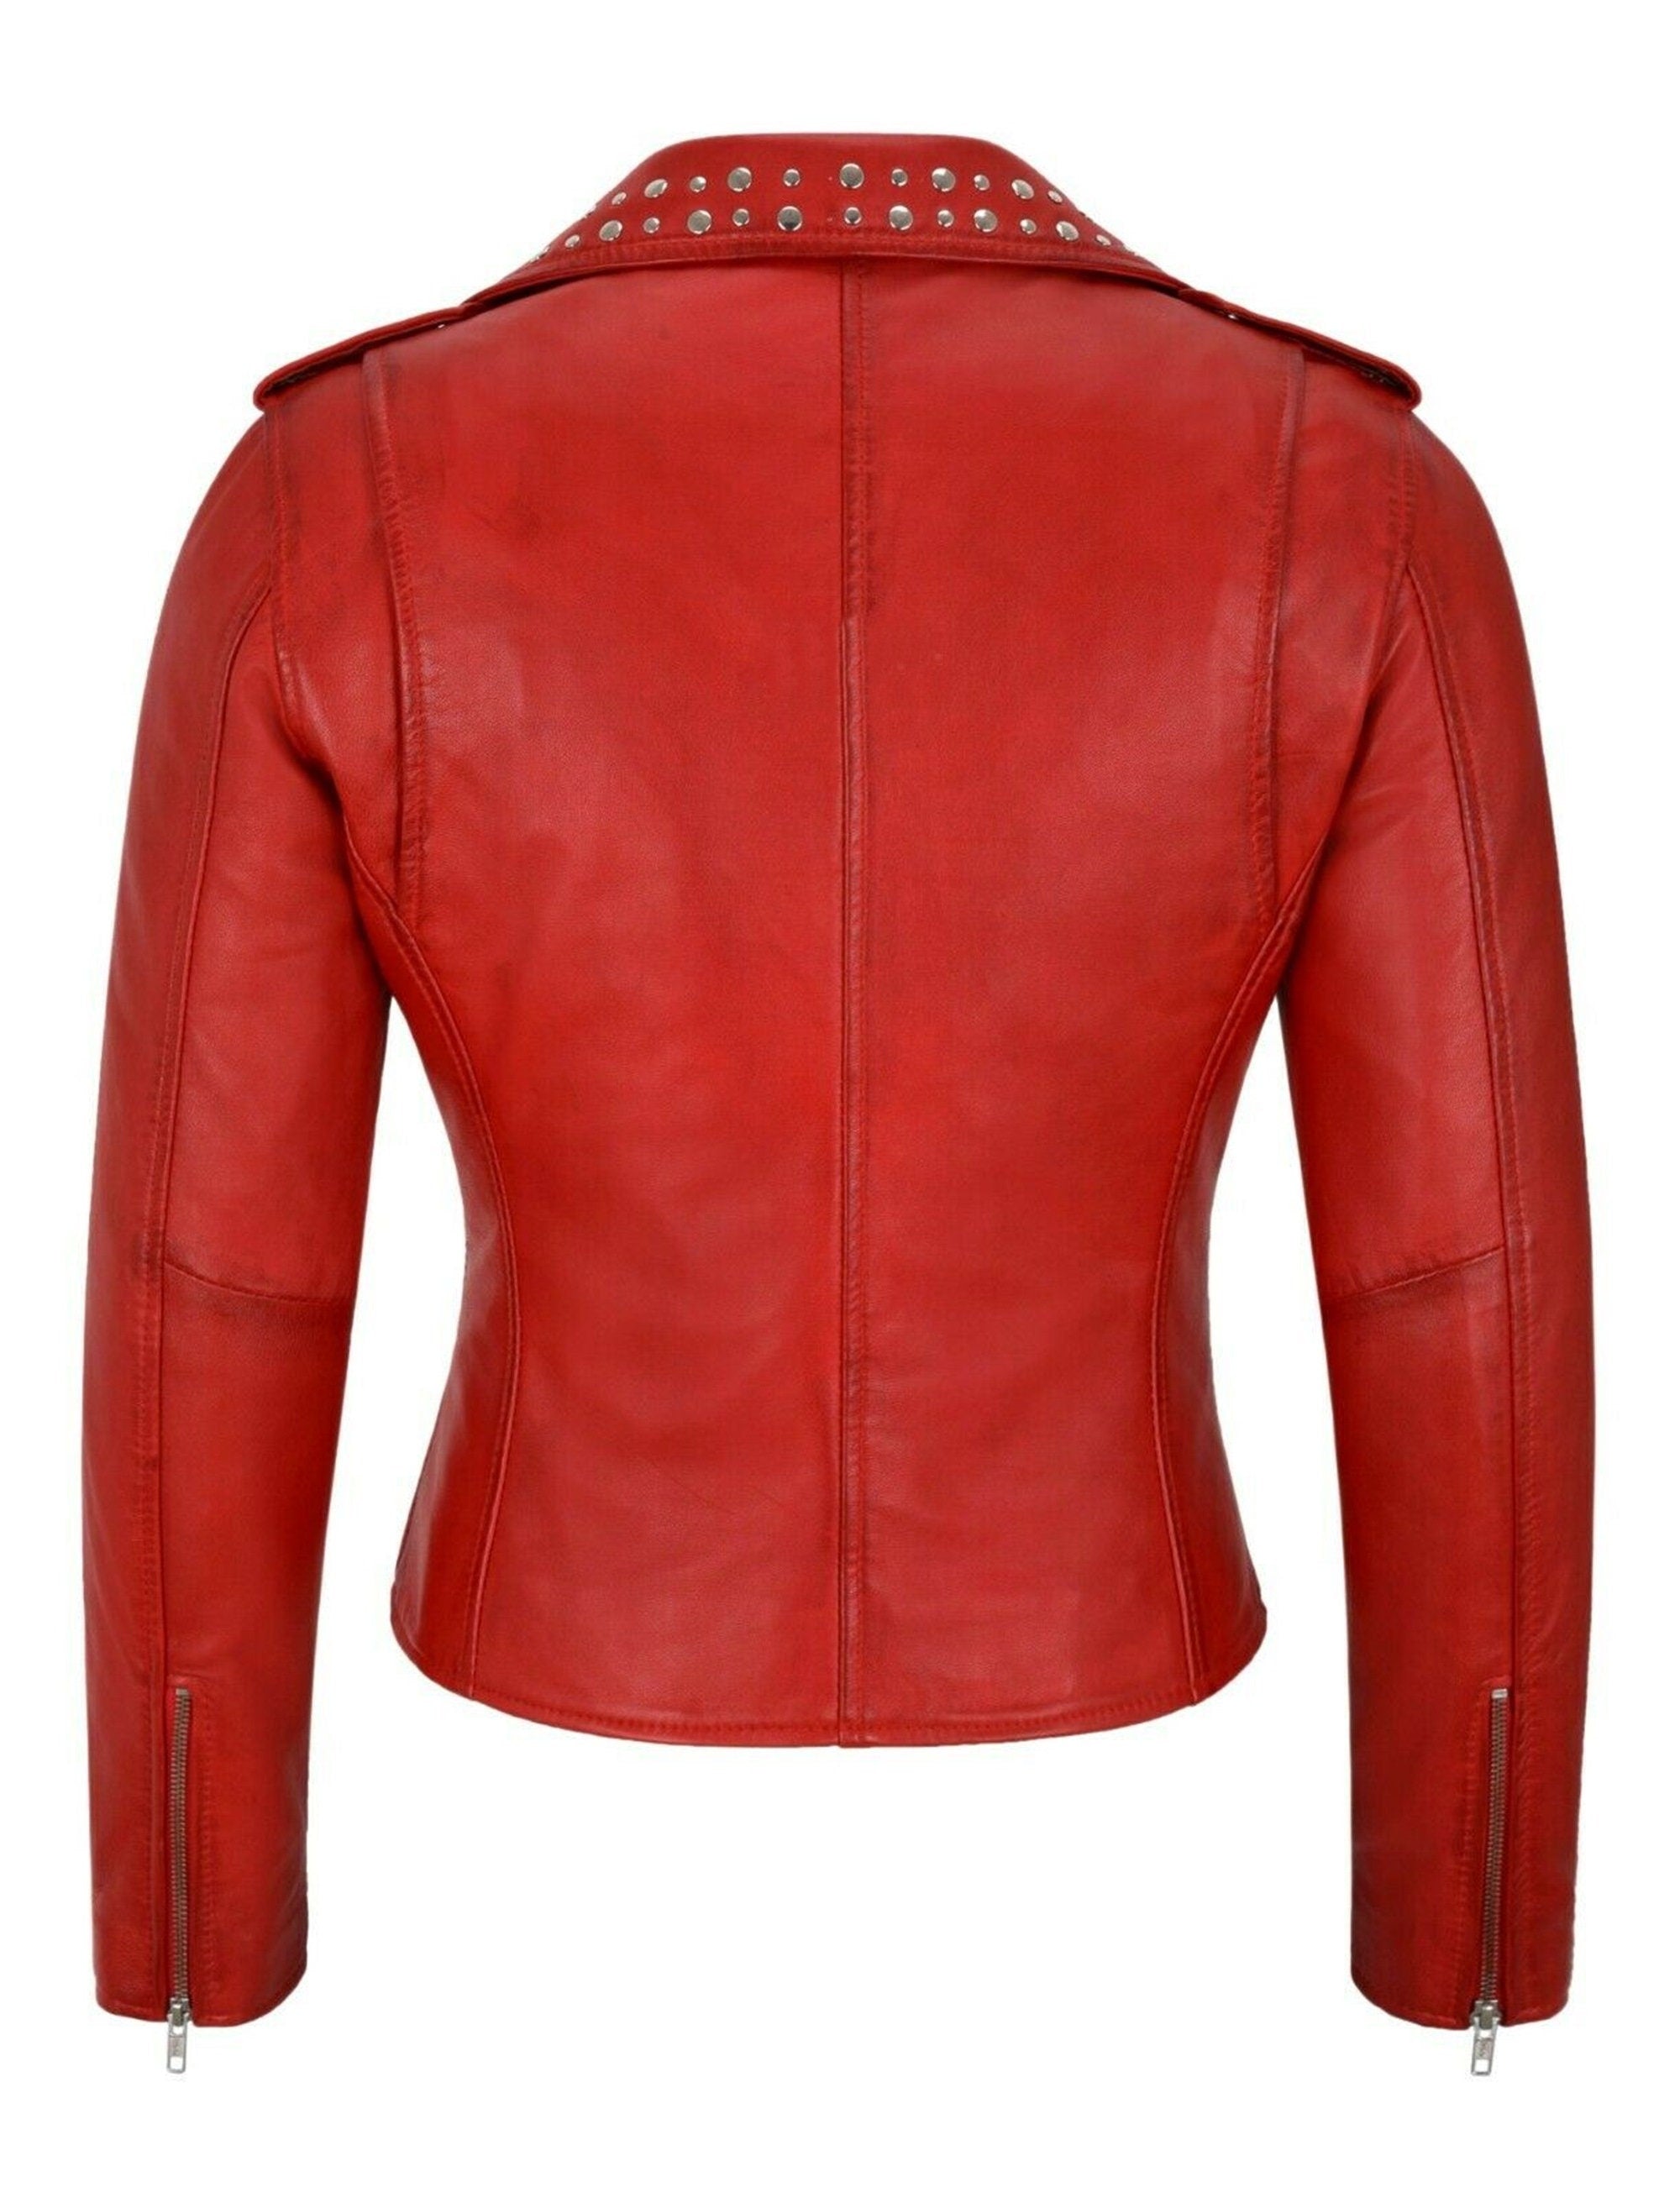 Women Red Rivet Studded Leather Biker Jacket